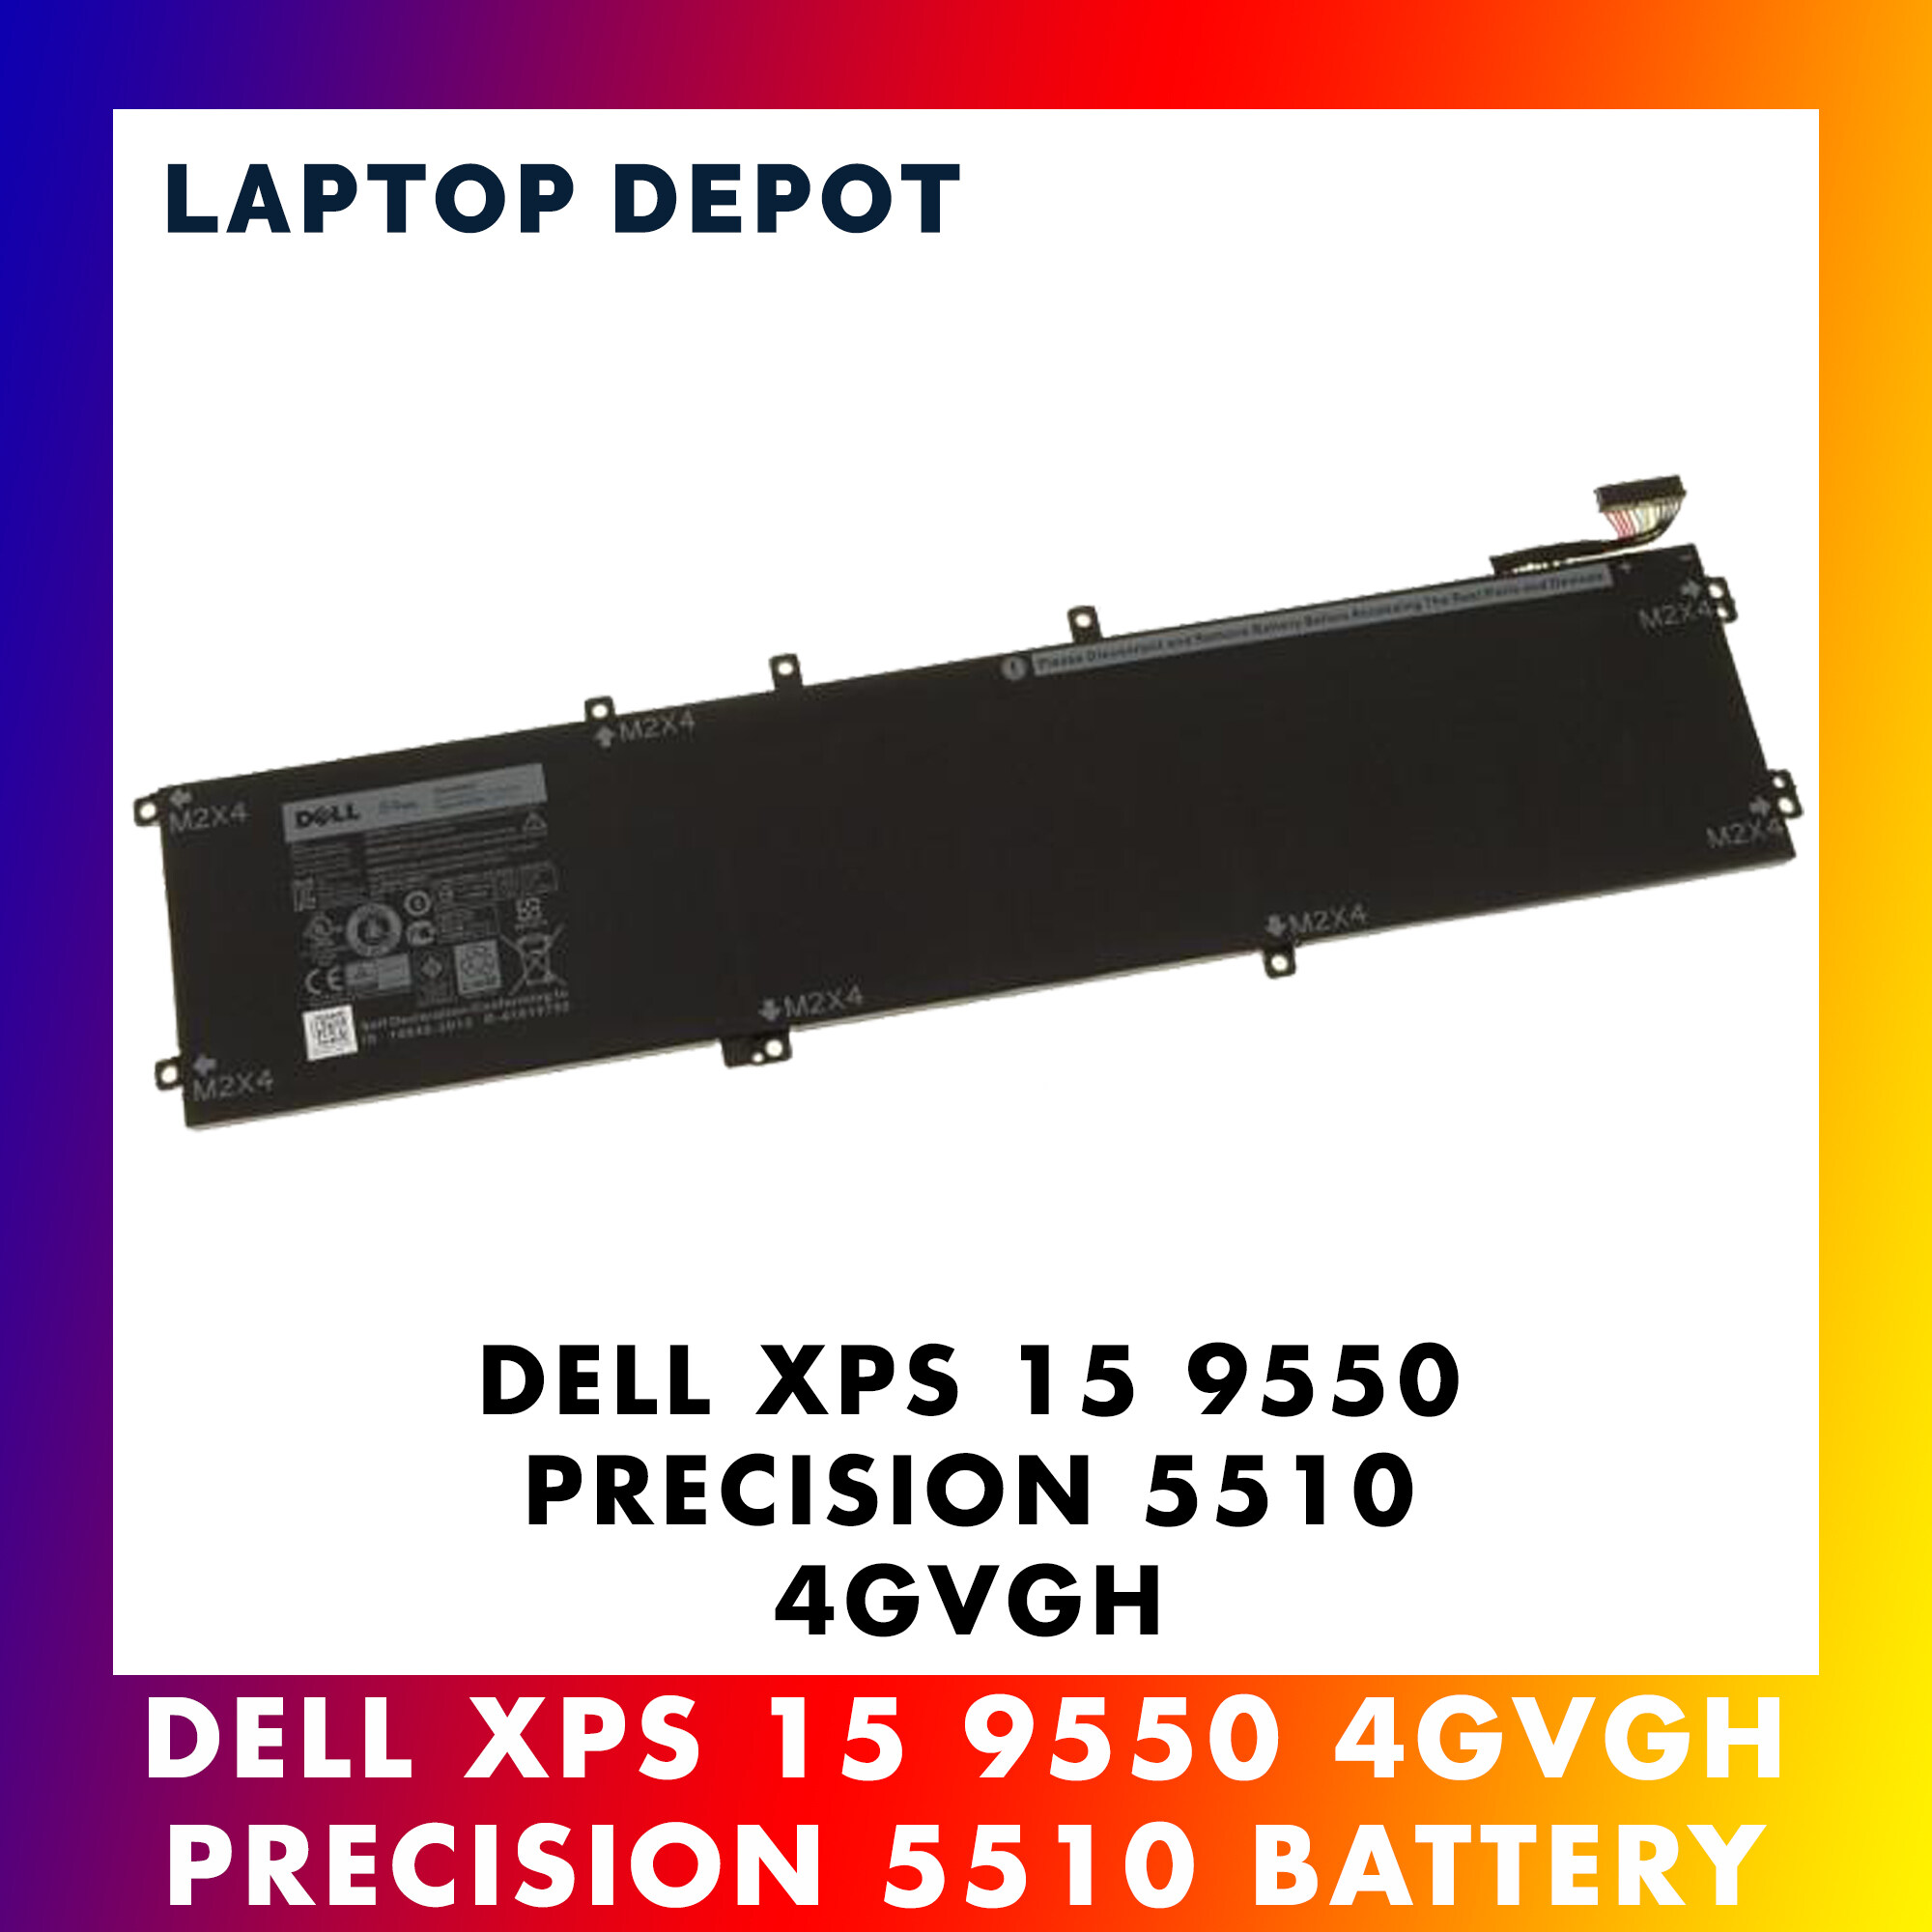 Dell XPS 15 9550 Precision 5510 4GVGH Original Replacement Battery | Lazada